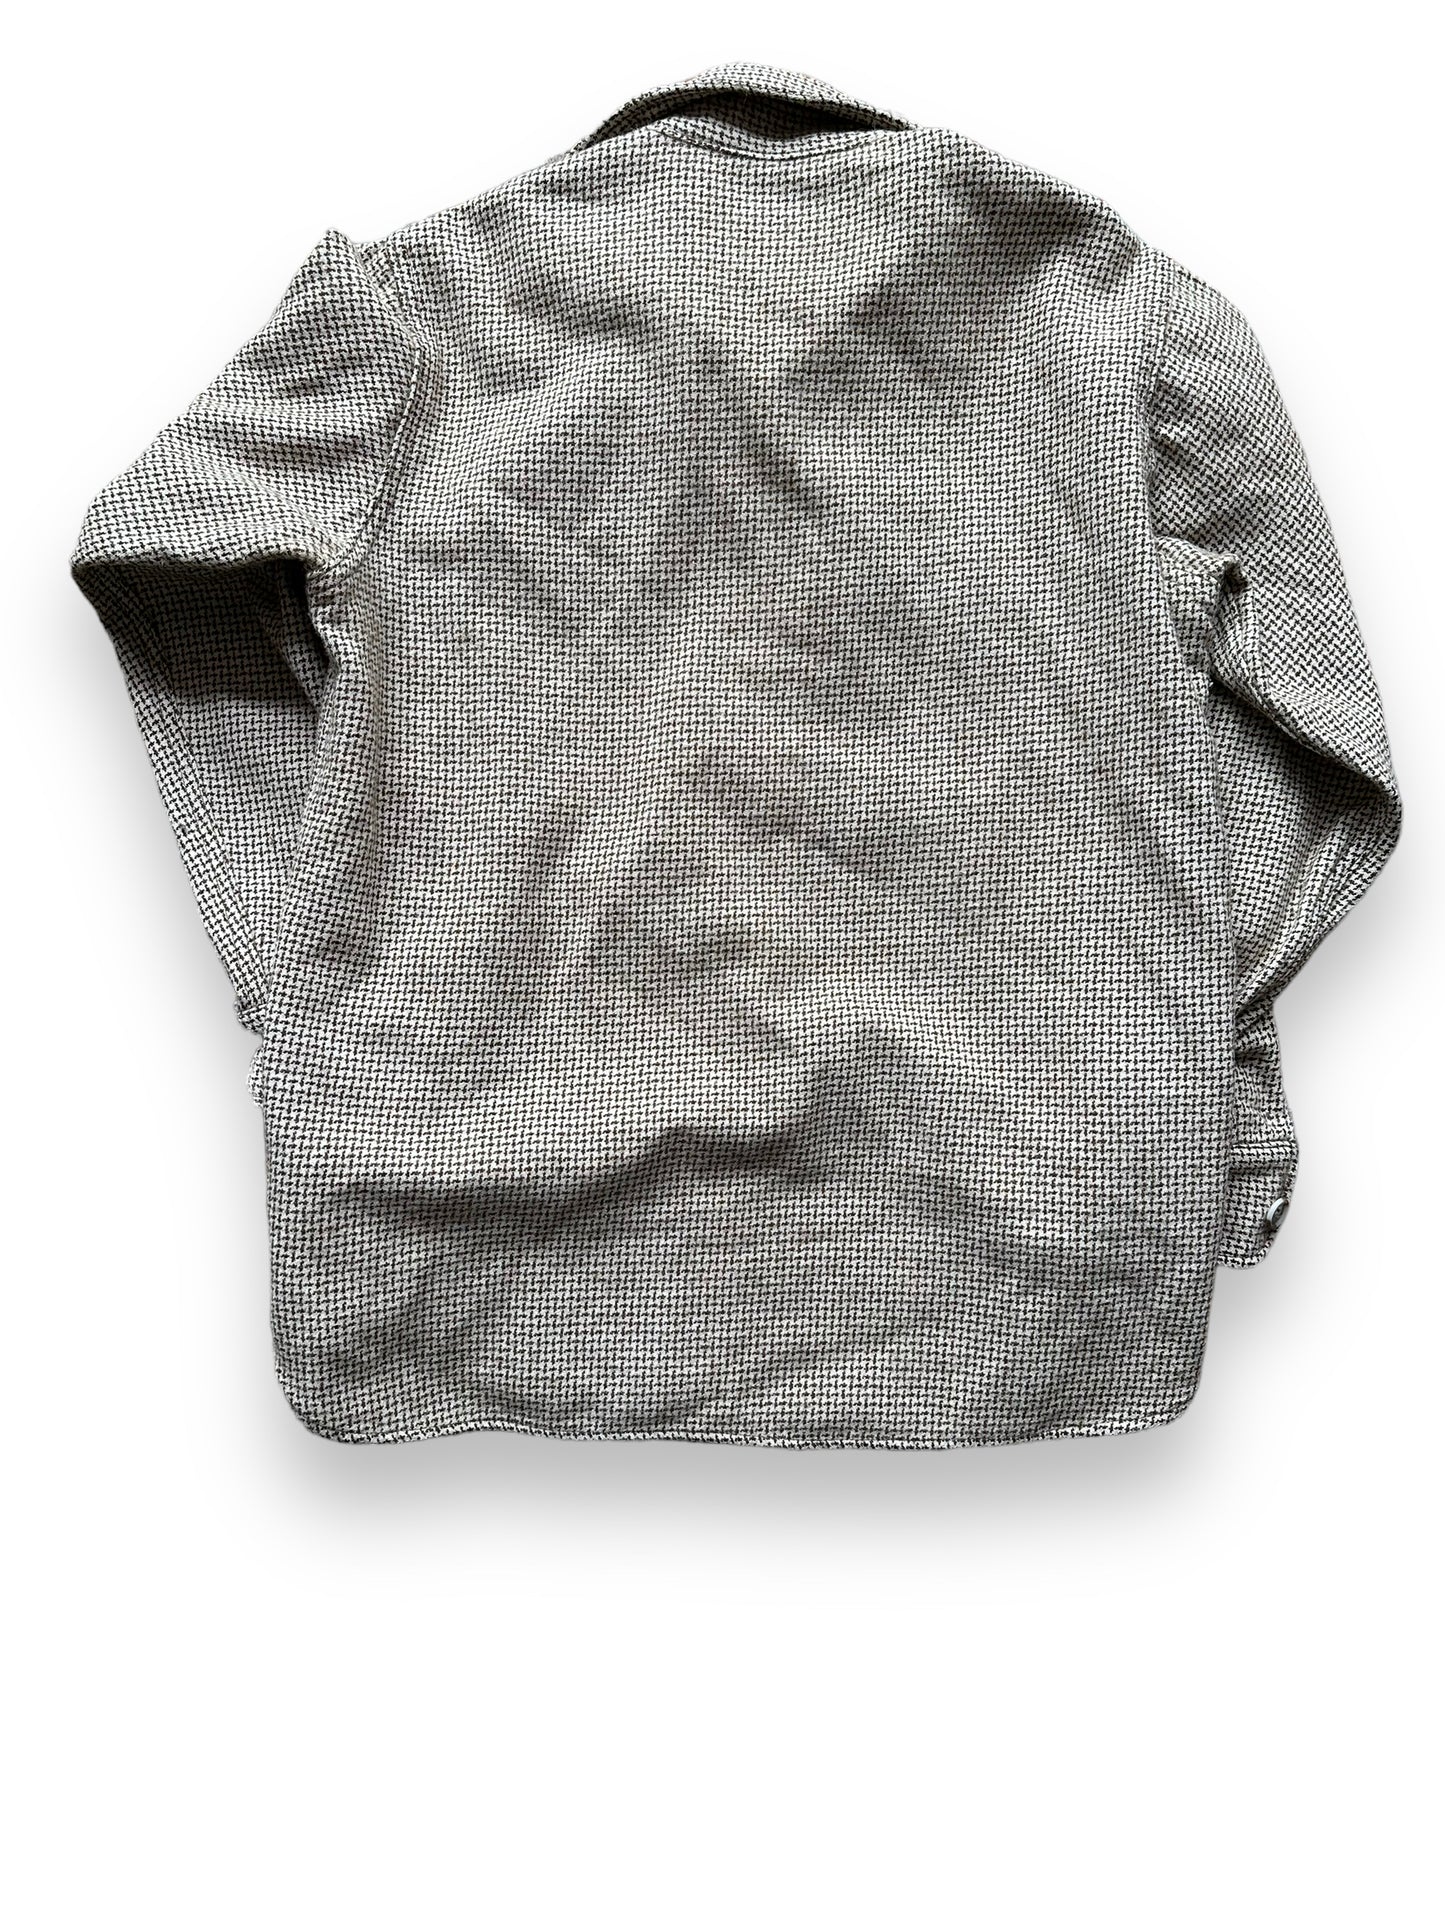 Rear View of Vintage Tan Houndstooth Woolrich Shirt Jacket SZ M |  Barn Owl Vintage Goods | Vintage Workwear Seattle